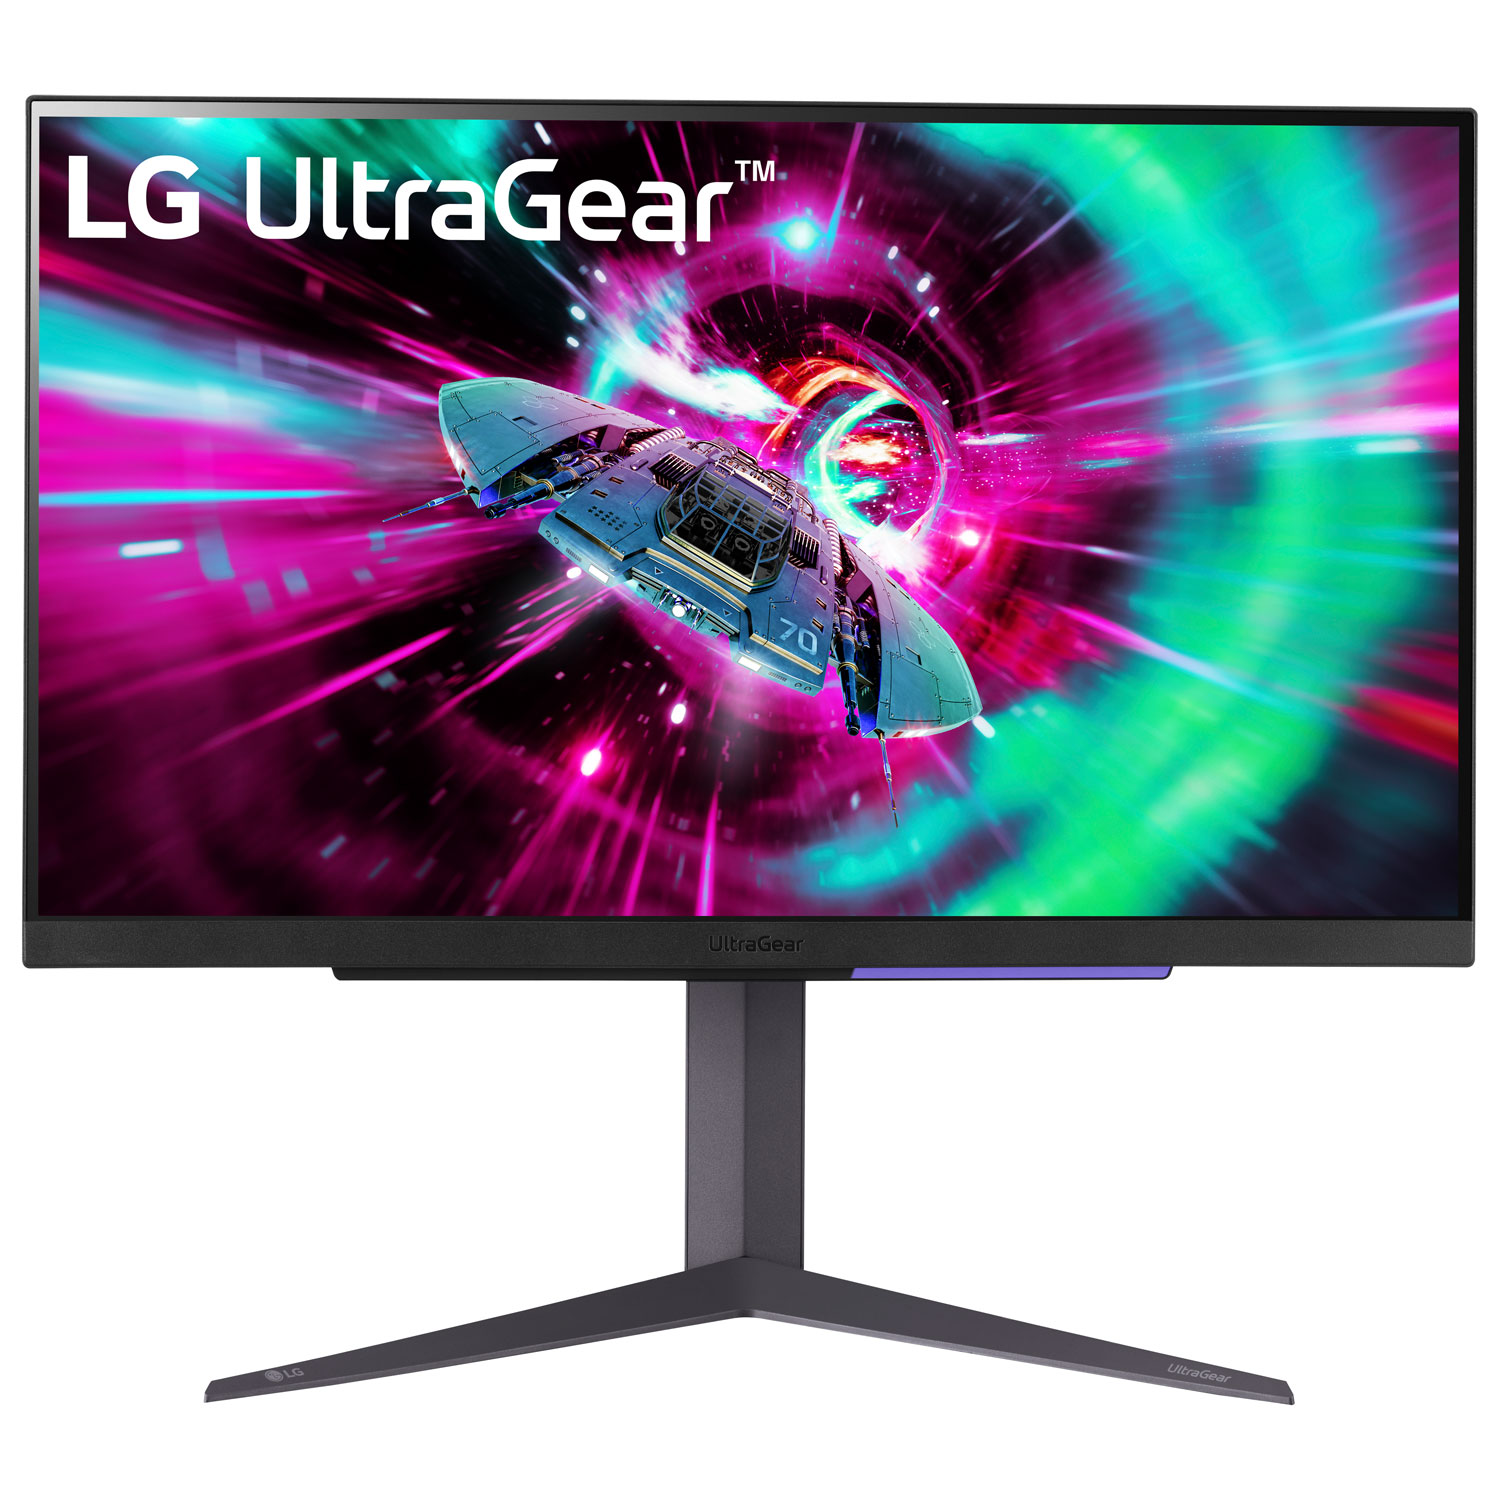 LG UltraGear 27" UHD 144Hz 1ms GTG IPS LCD G-Sync Gaming Monitor (27GR93U-B) - Black